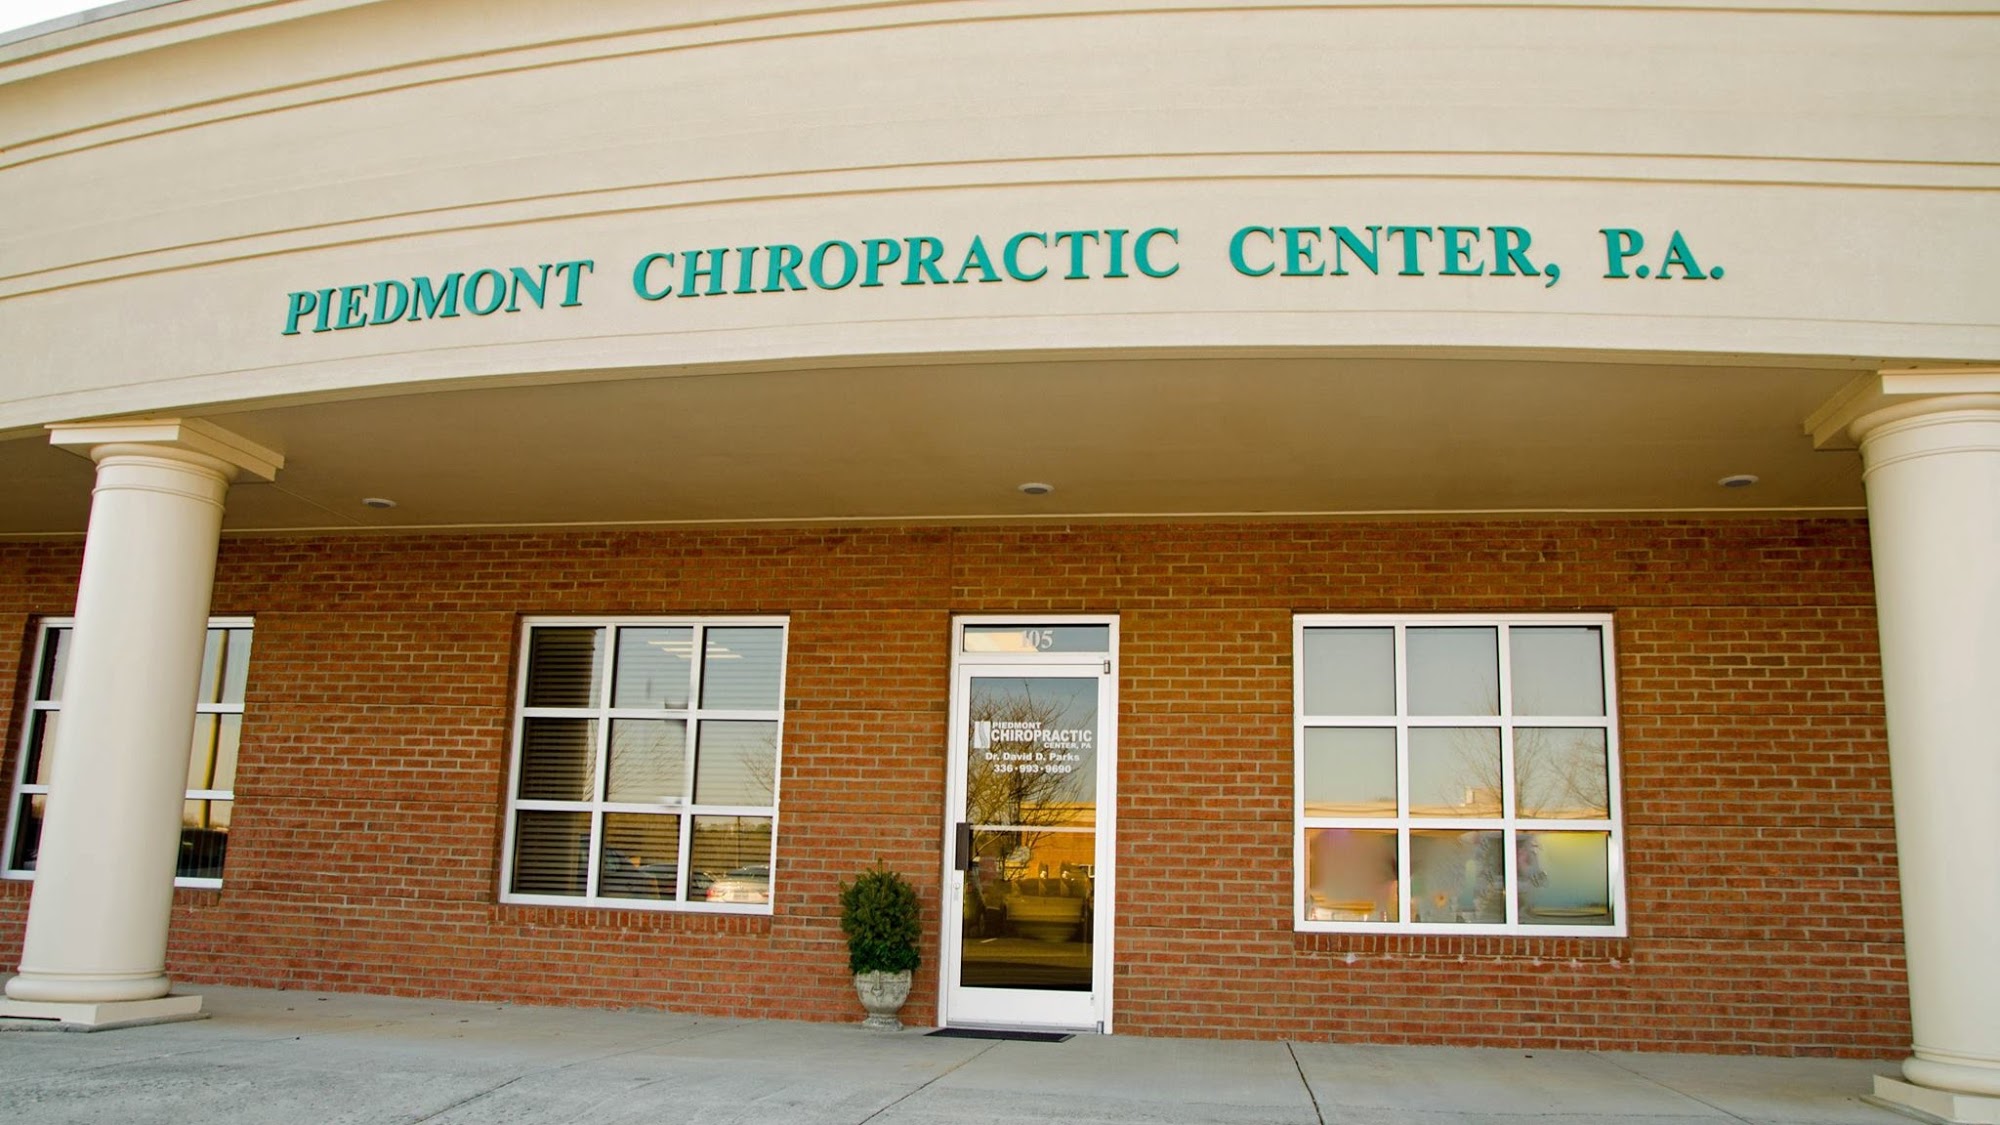 Piedmont Chiropractic Center, PA